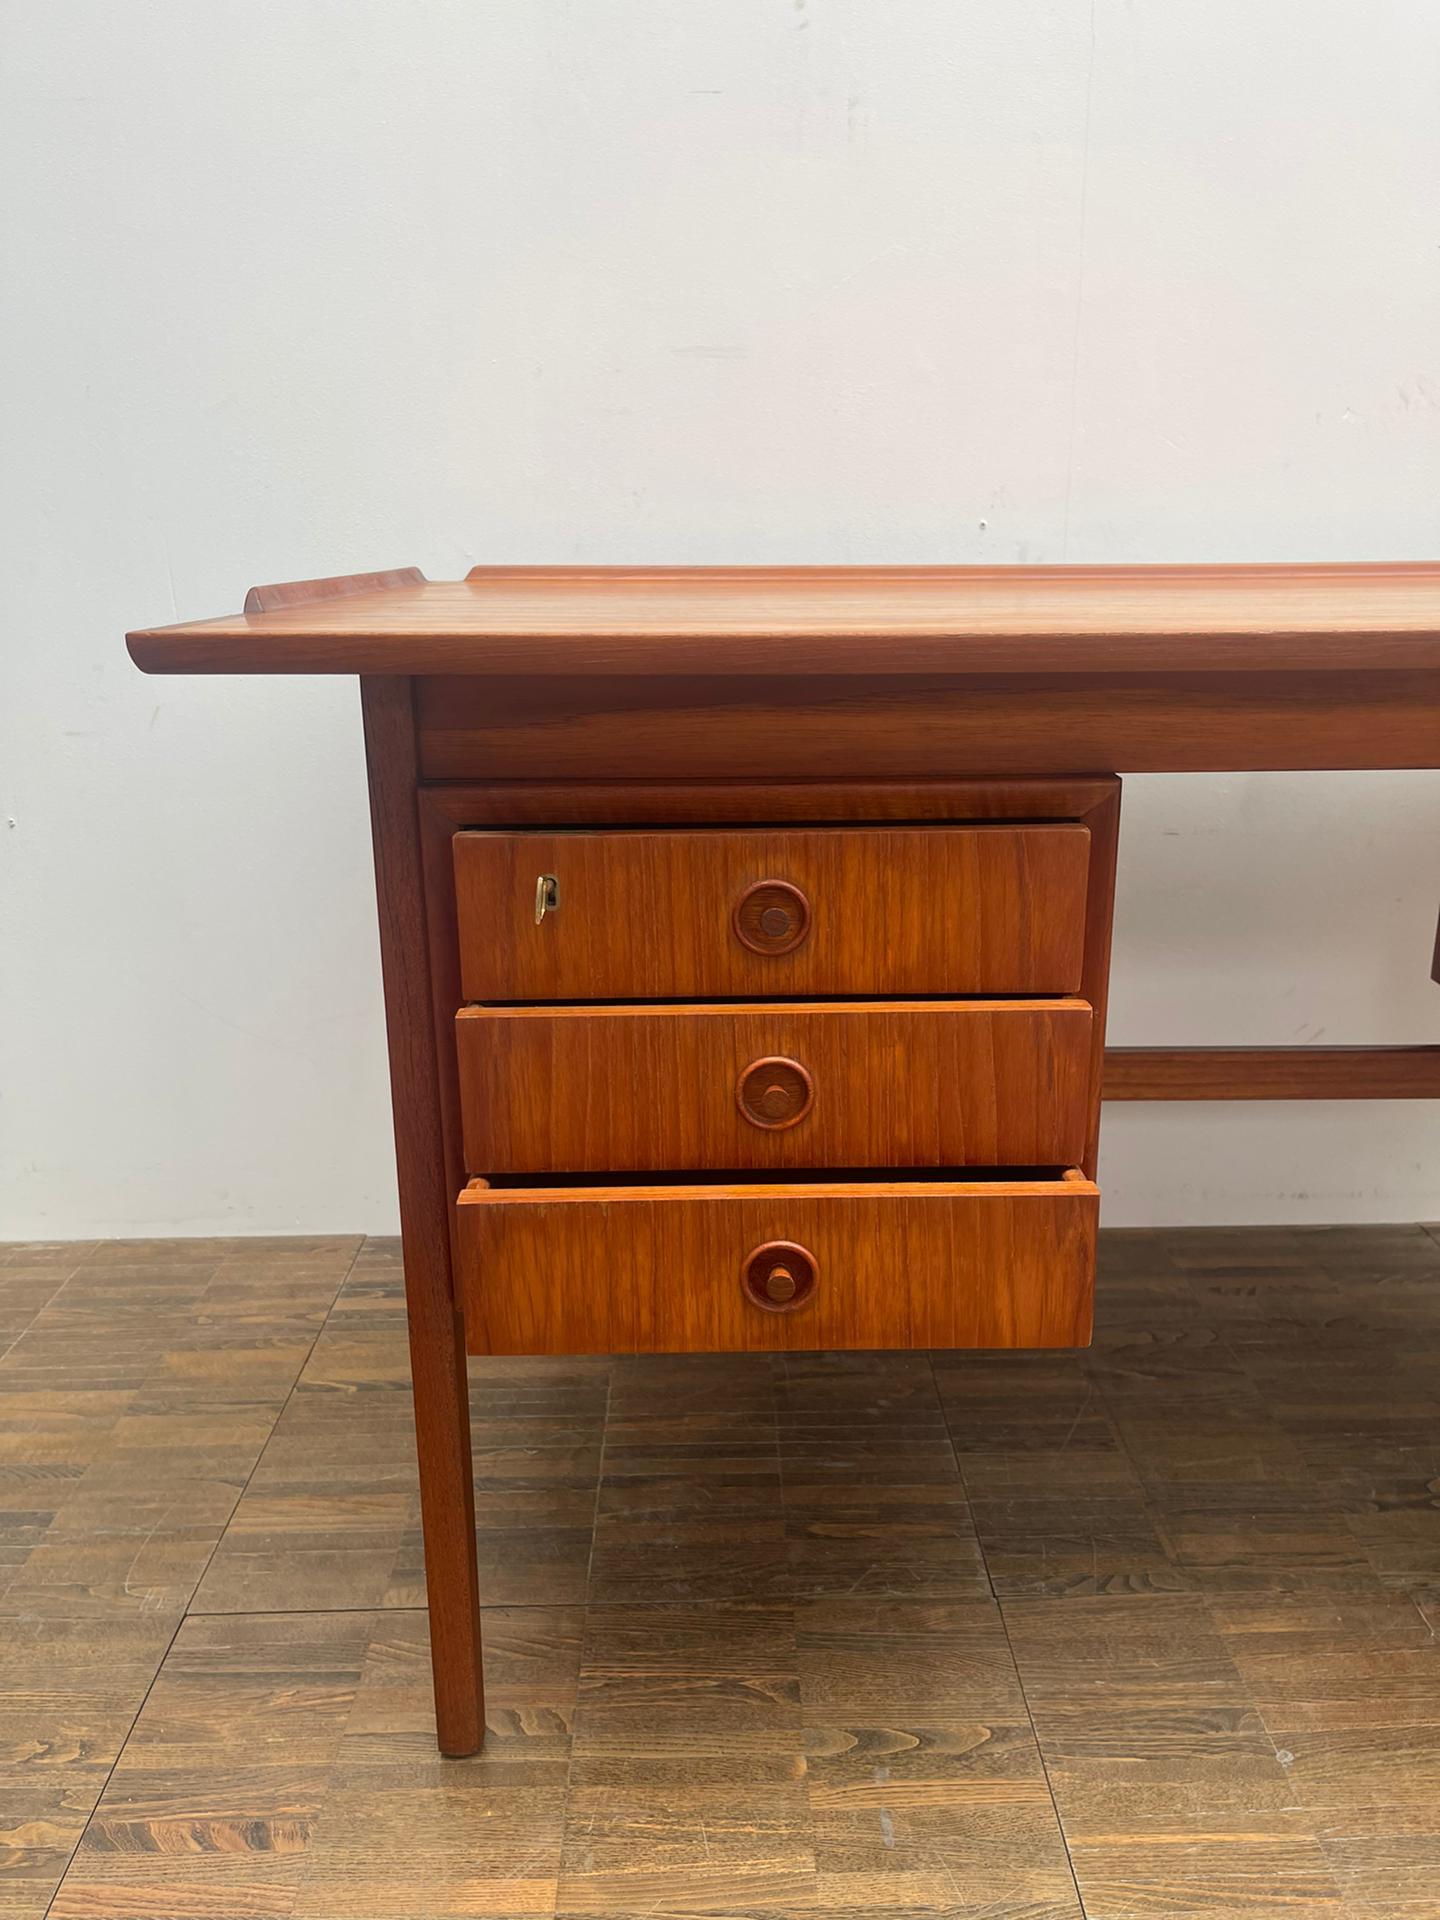 Mid-Century Modern brown teak desk with drawers.

